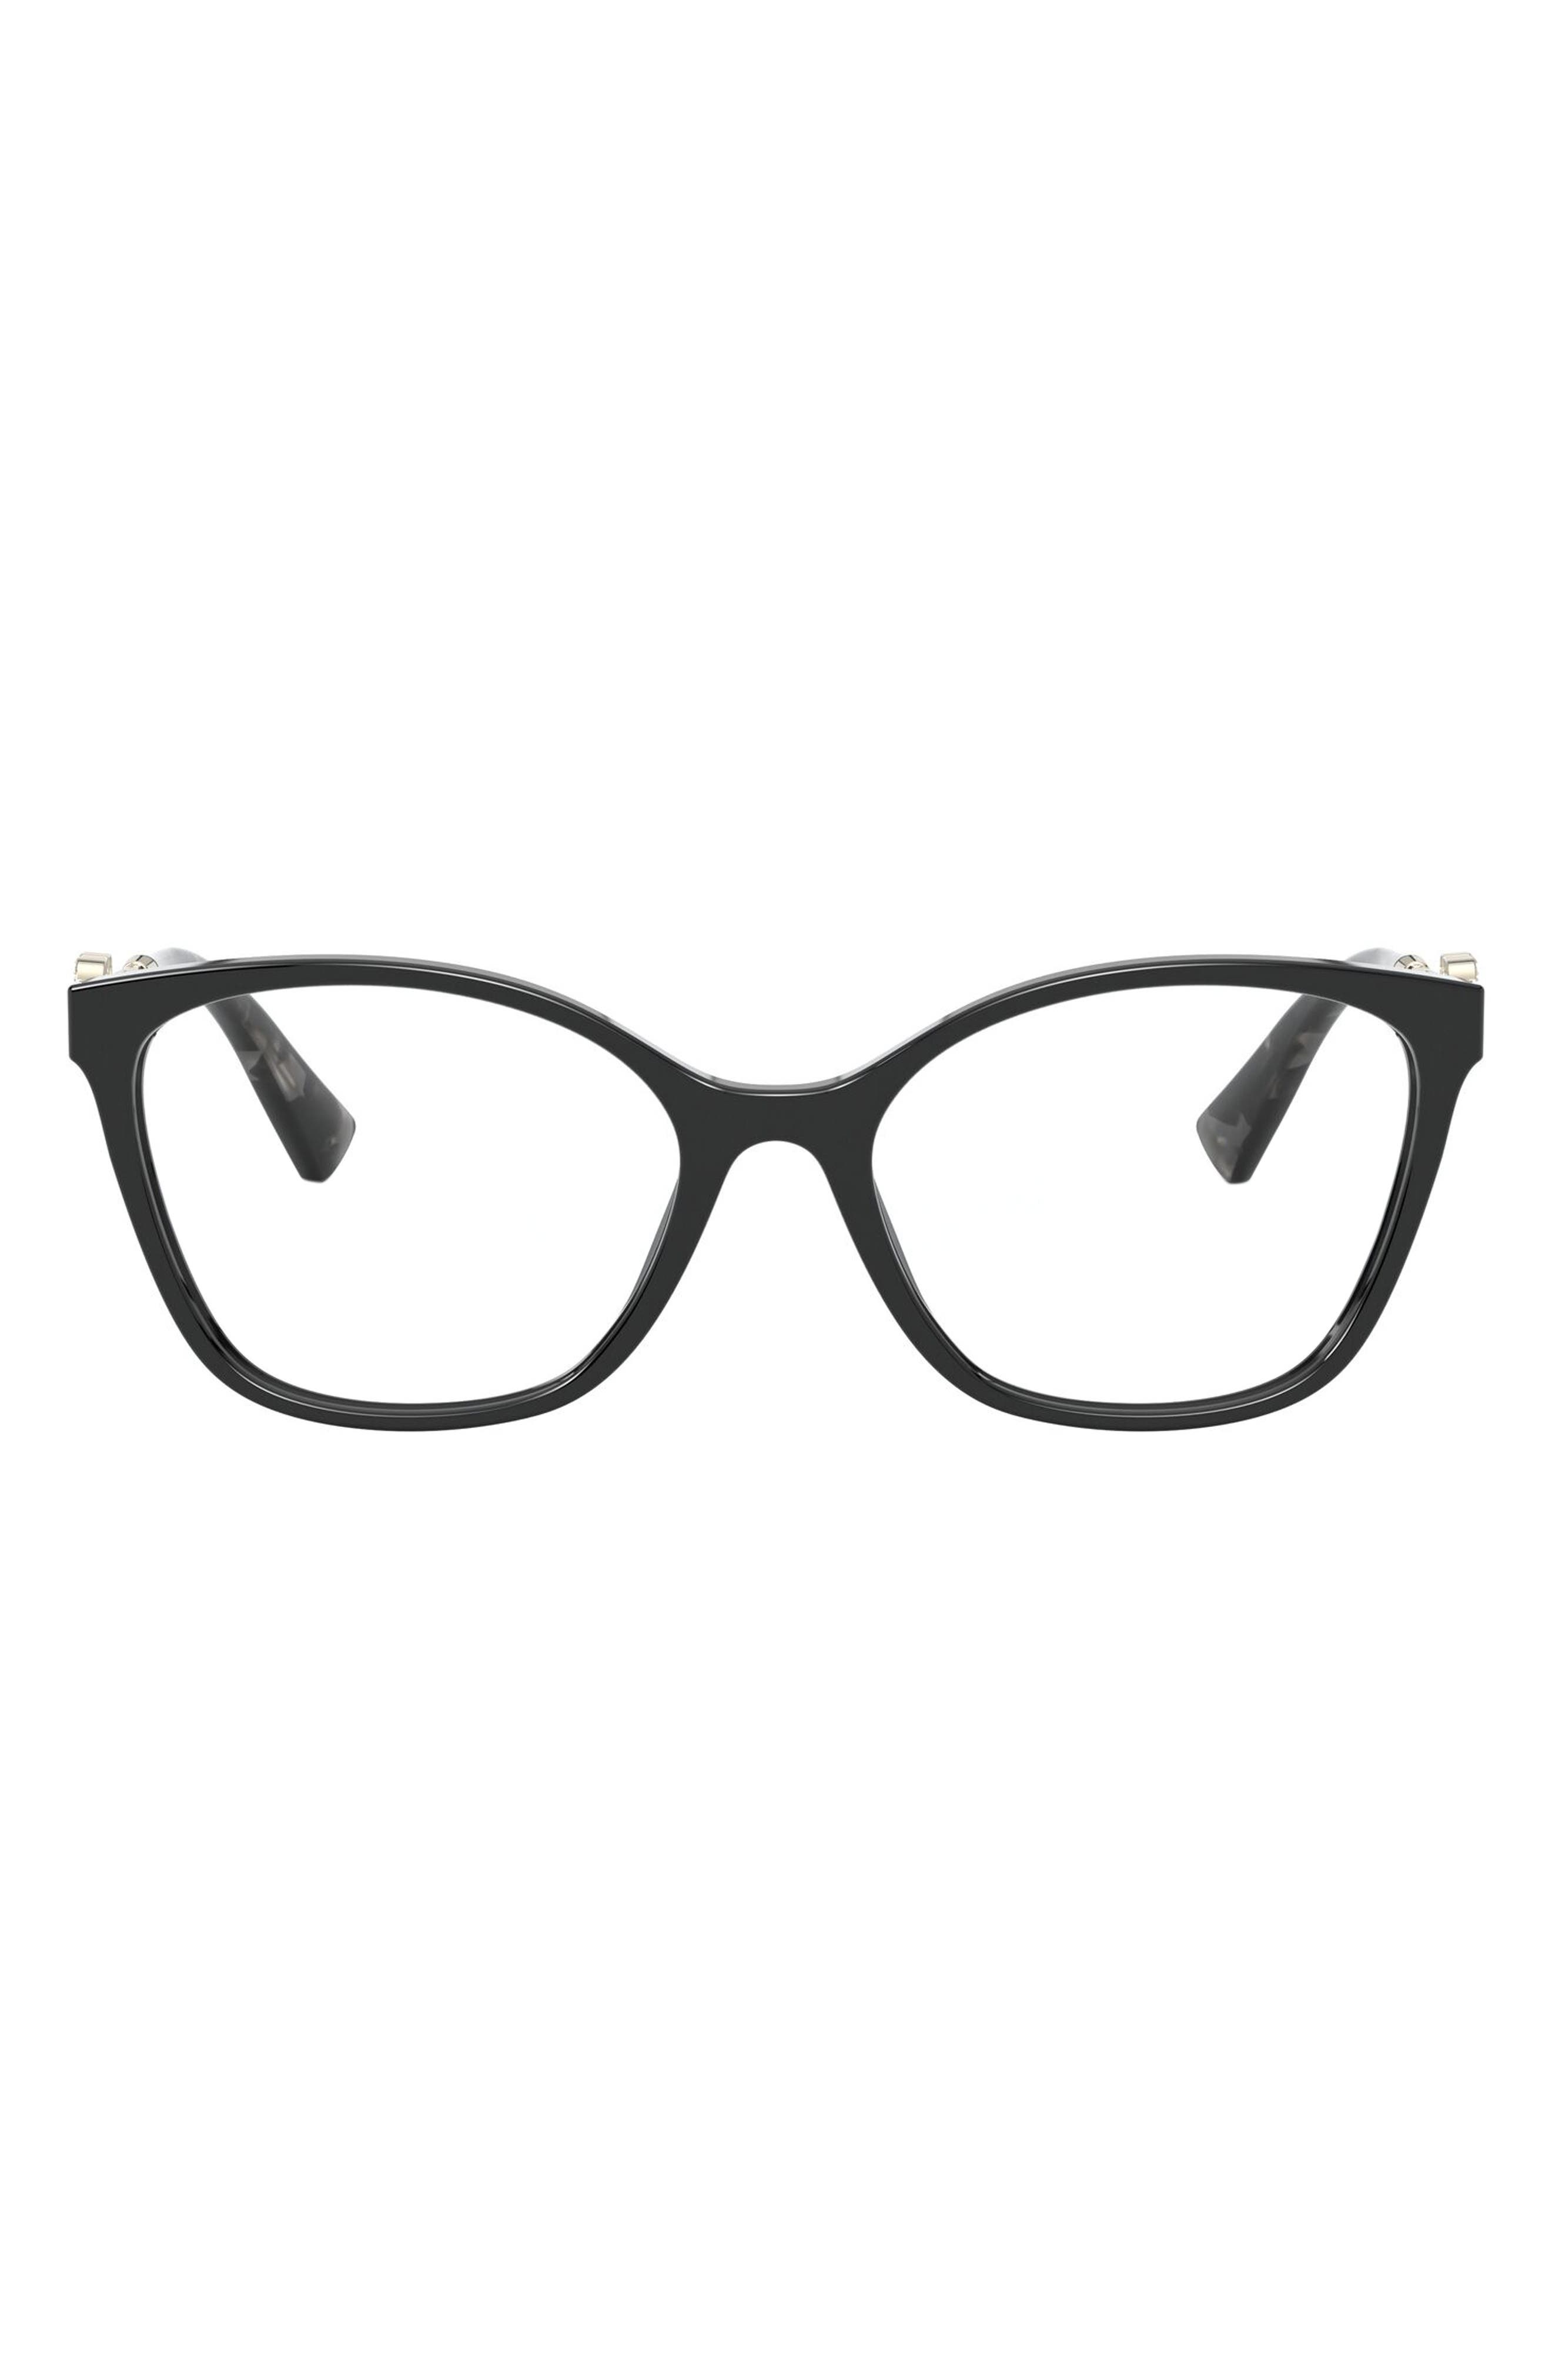 Valentino 54mm Cat Eye Optical Glasses in Black/Demo Lens at Nordstrom